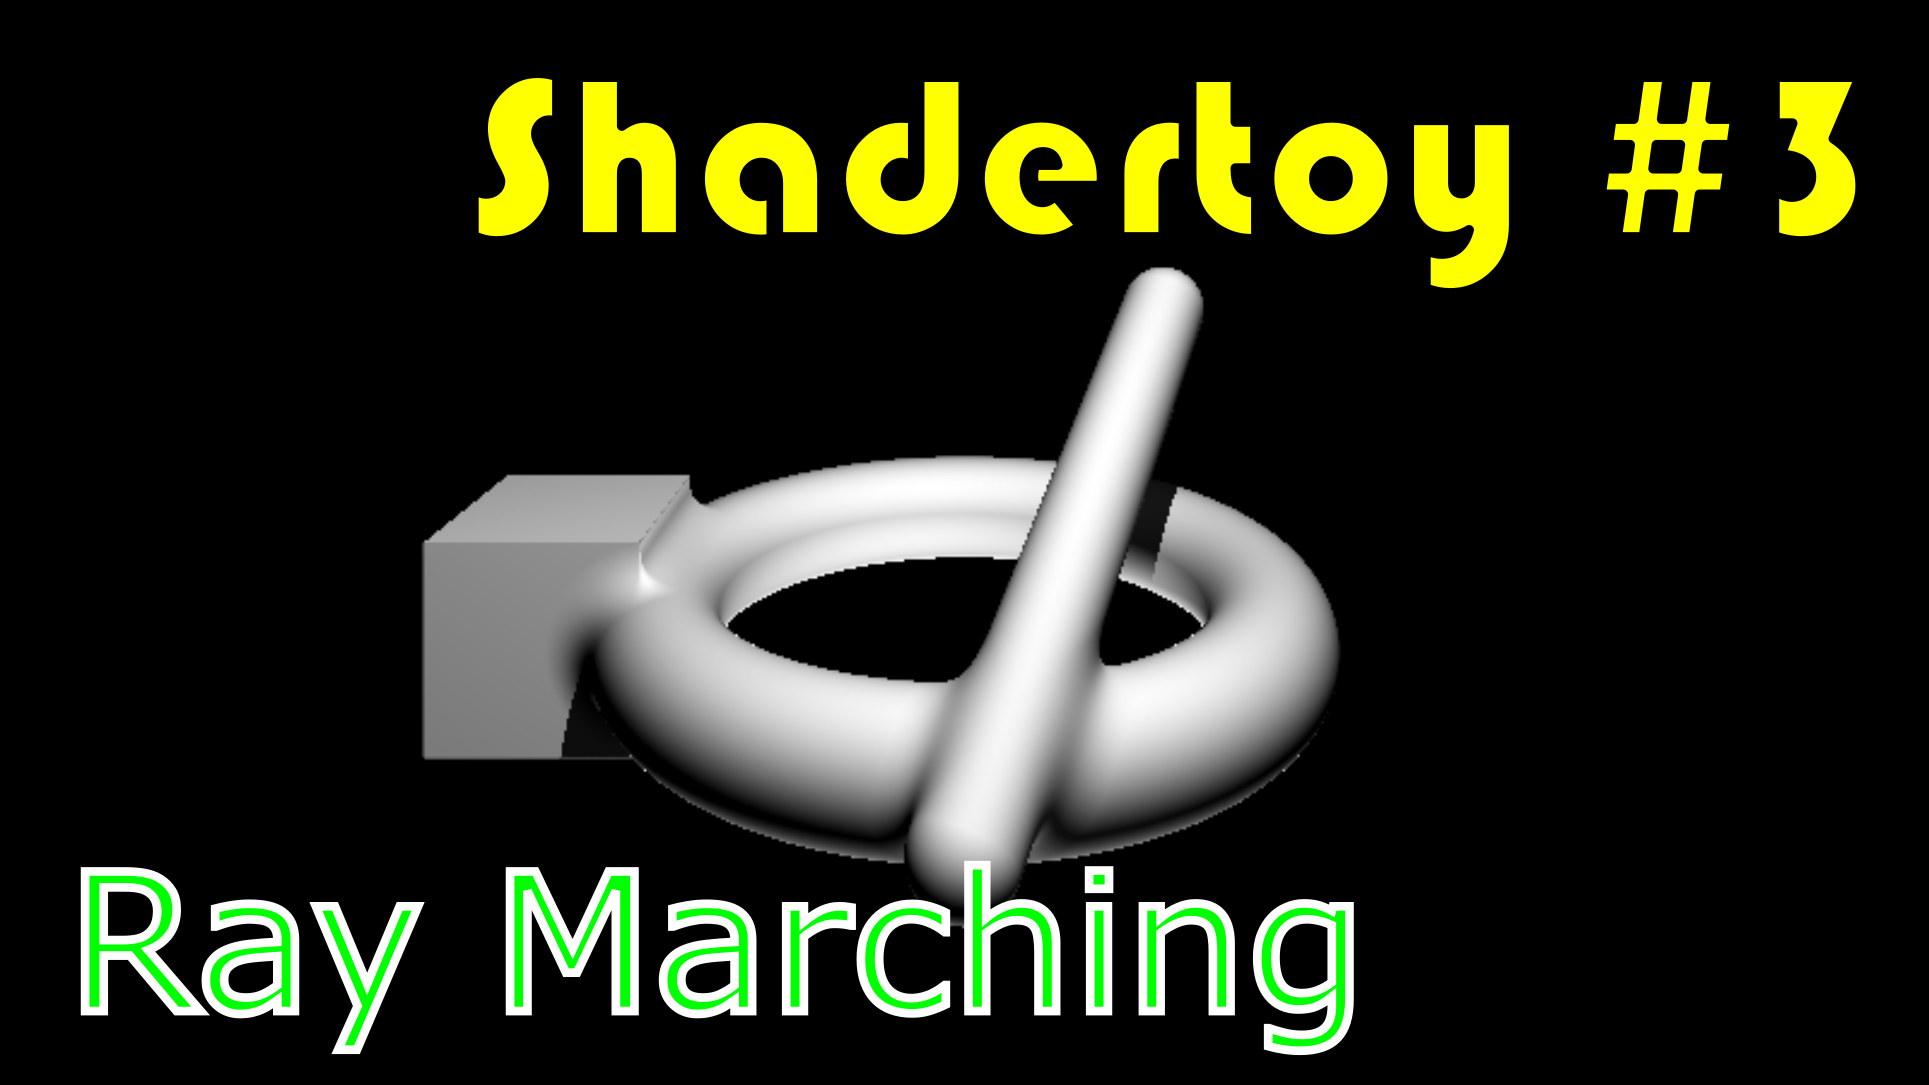 Shadertoy 3 Raymarching